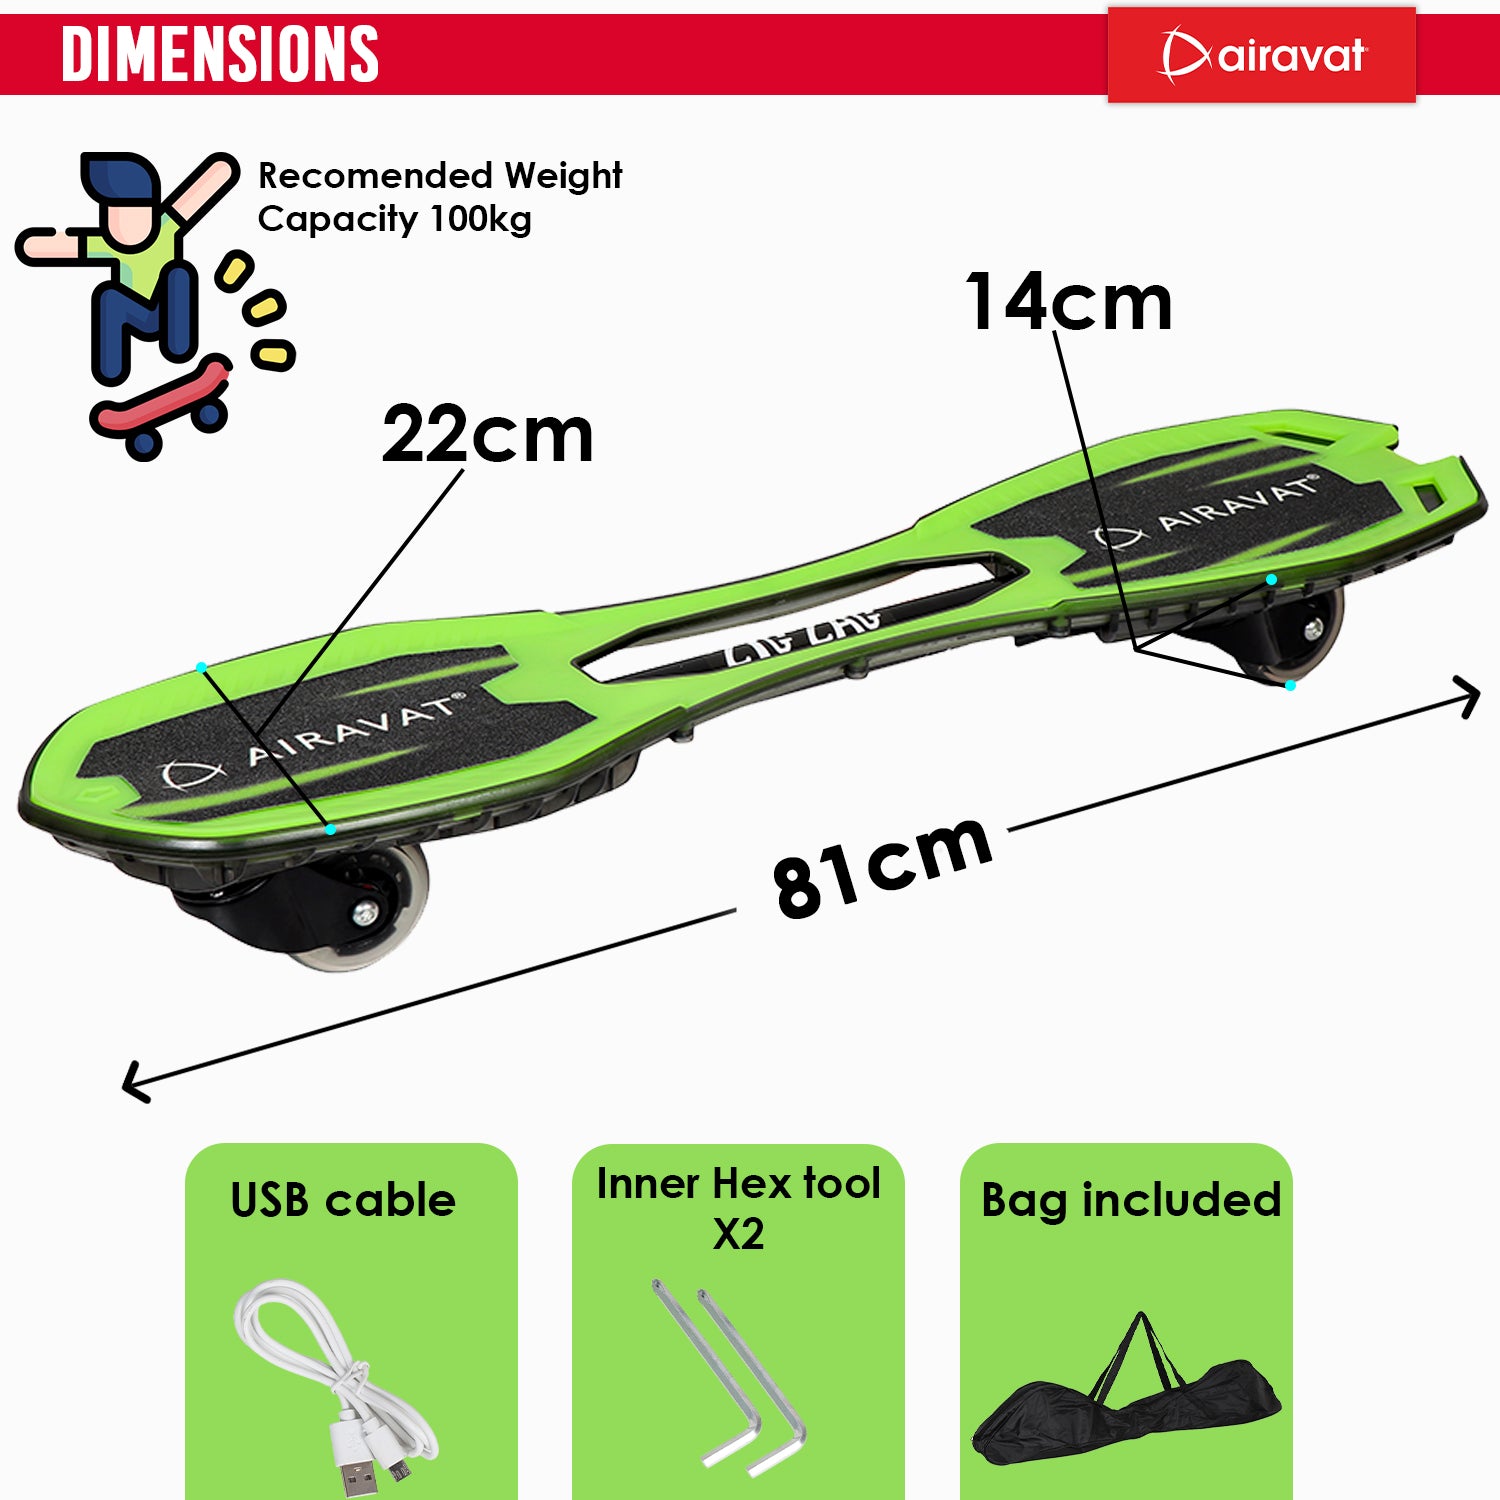 Dimensions of zig zag waveboard green